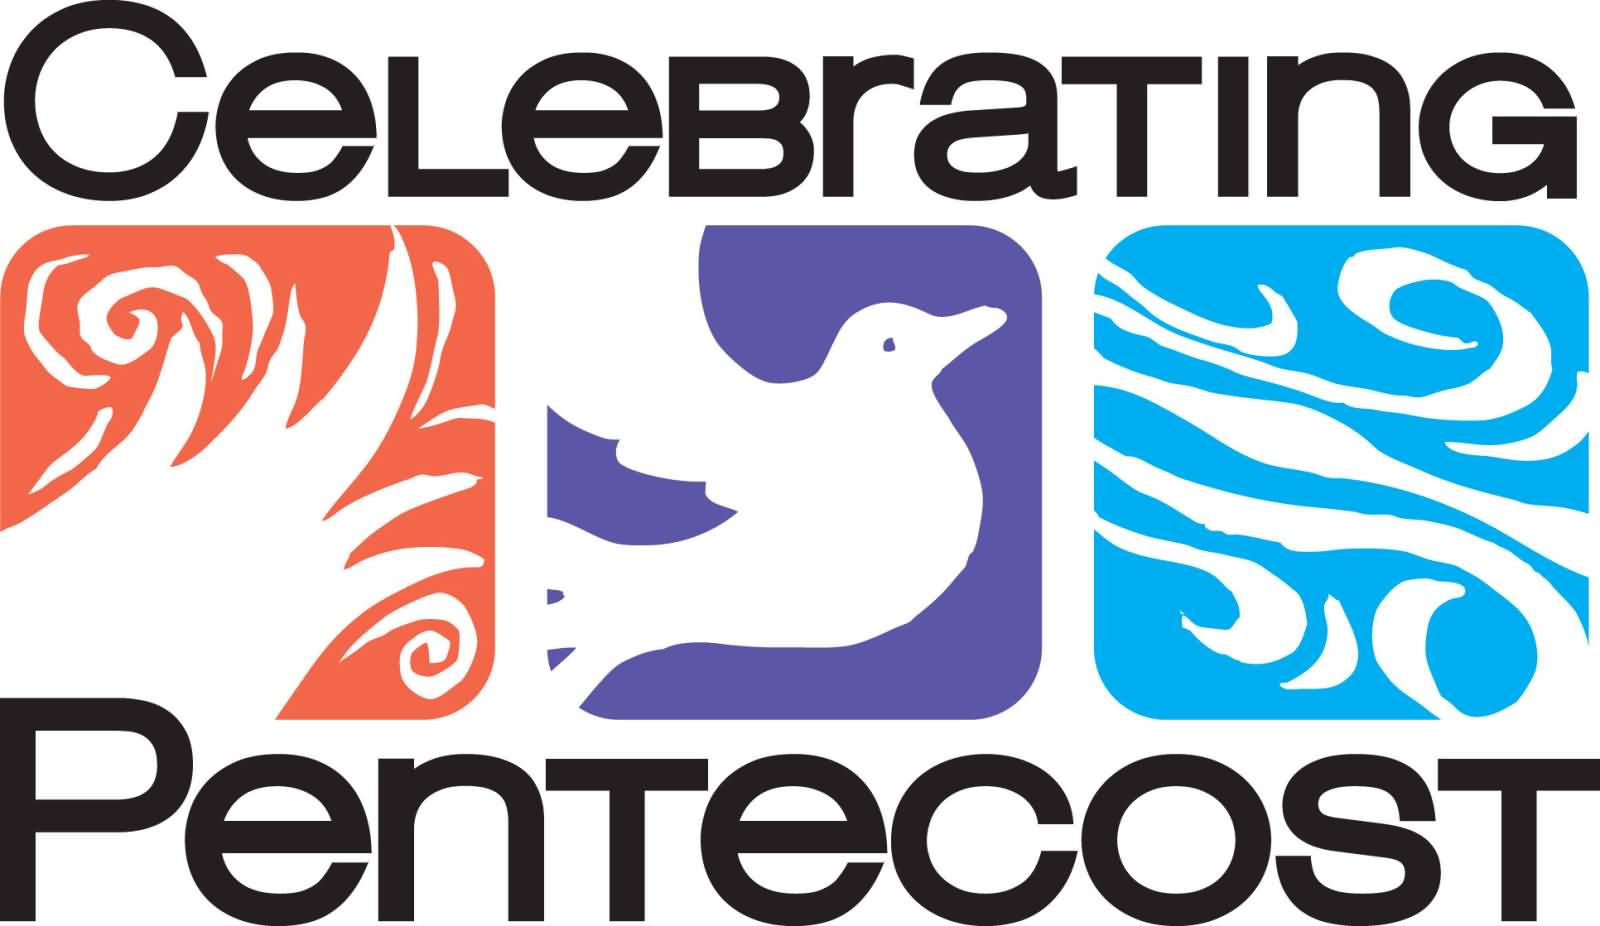 Celebrating Pentecost Picture